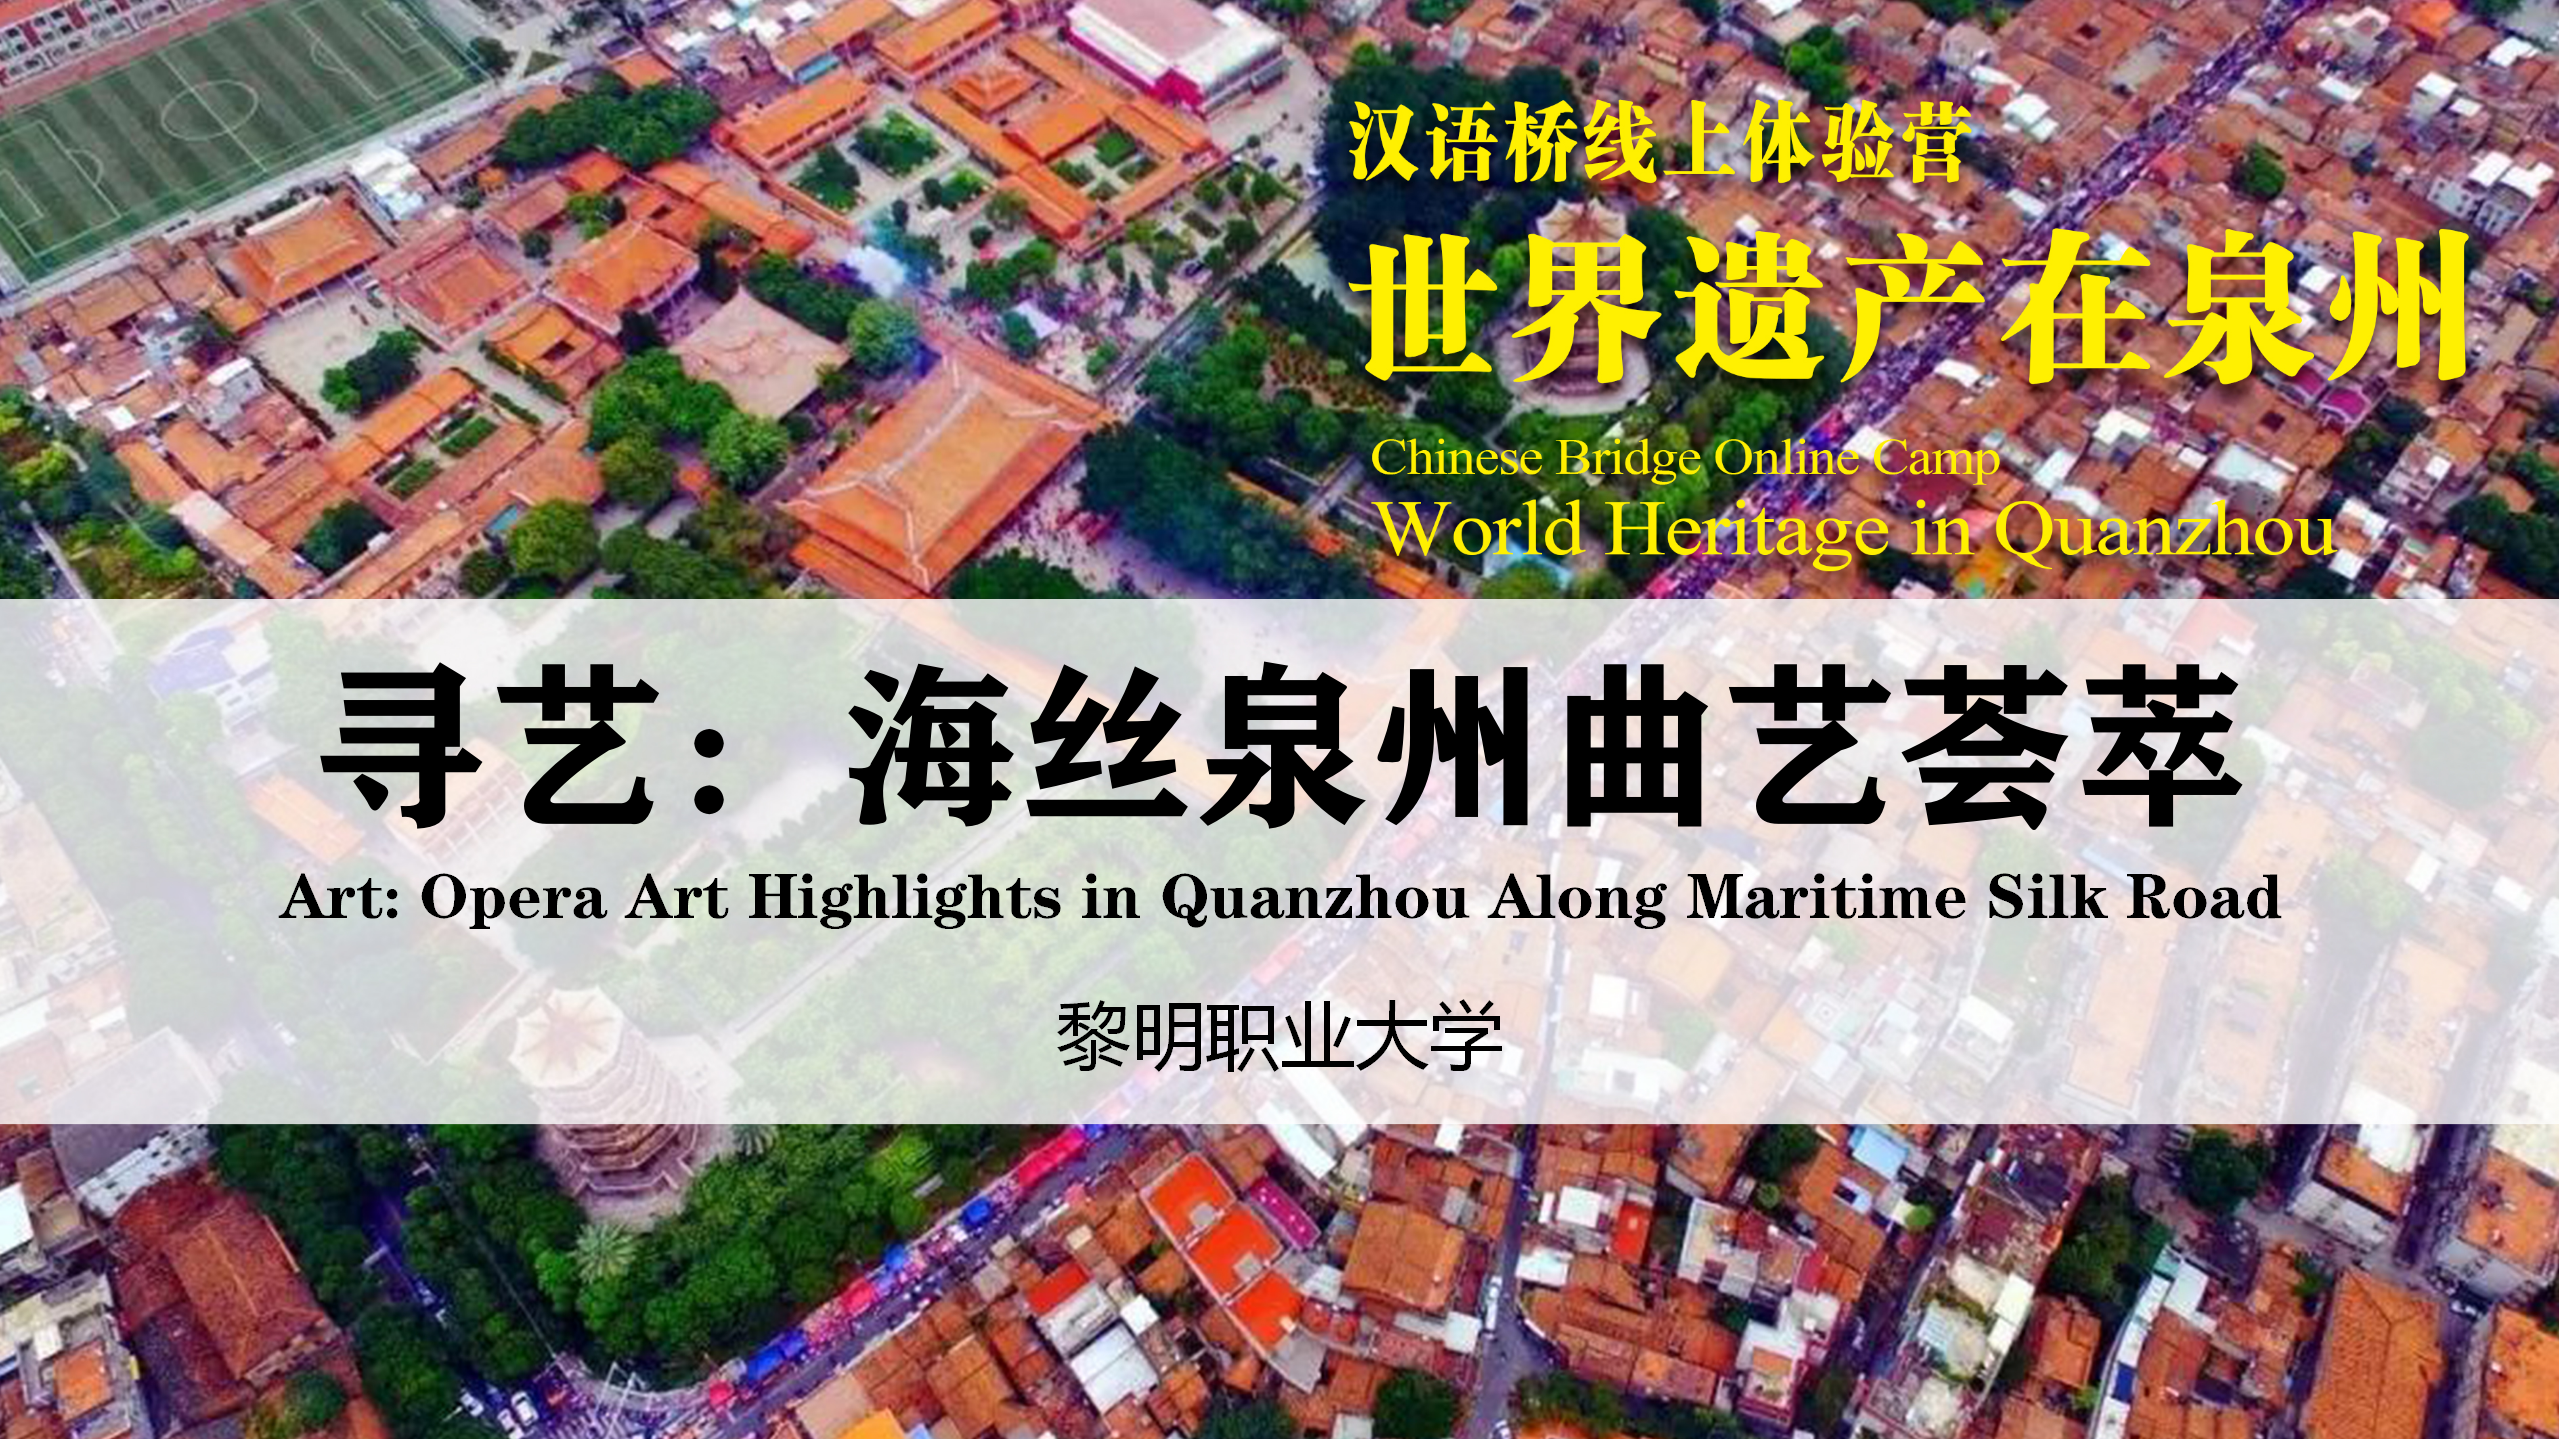 Art: Opera Art Highlights in Quanzhou Along Maritime Silk Road